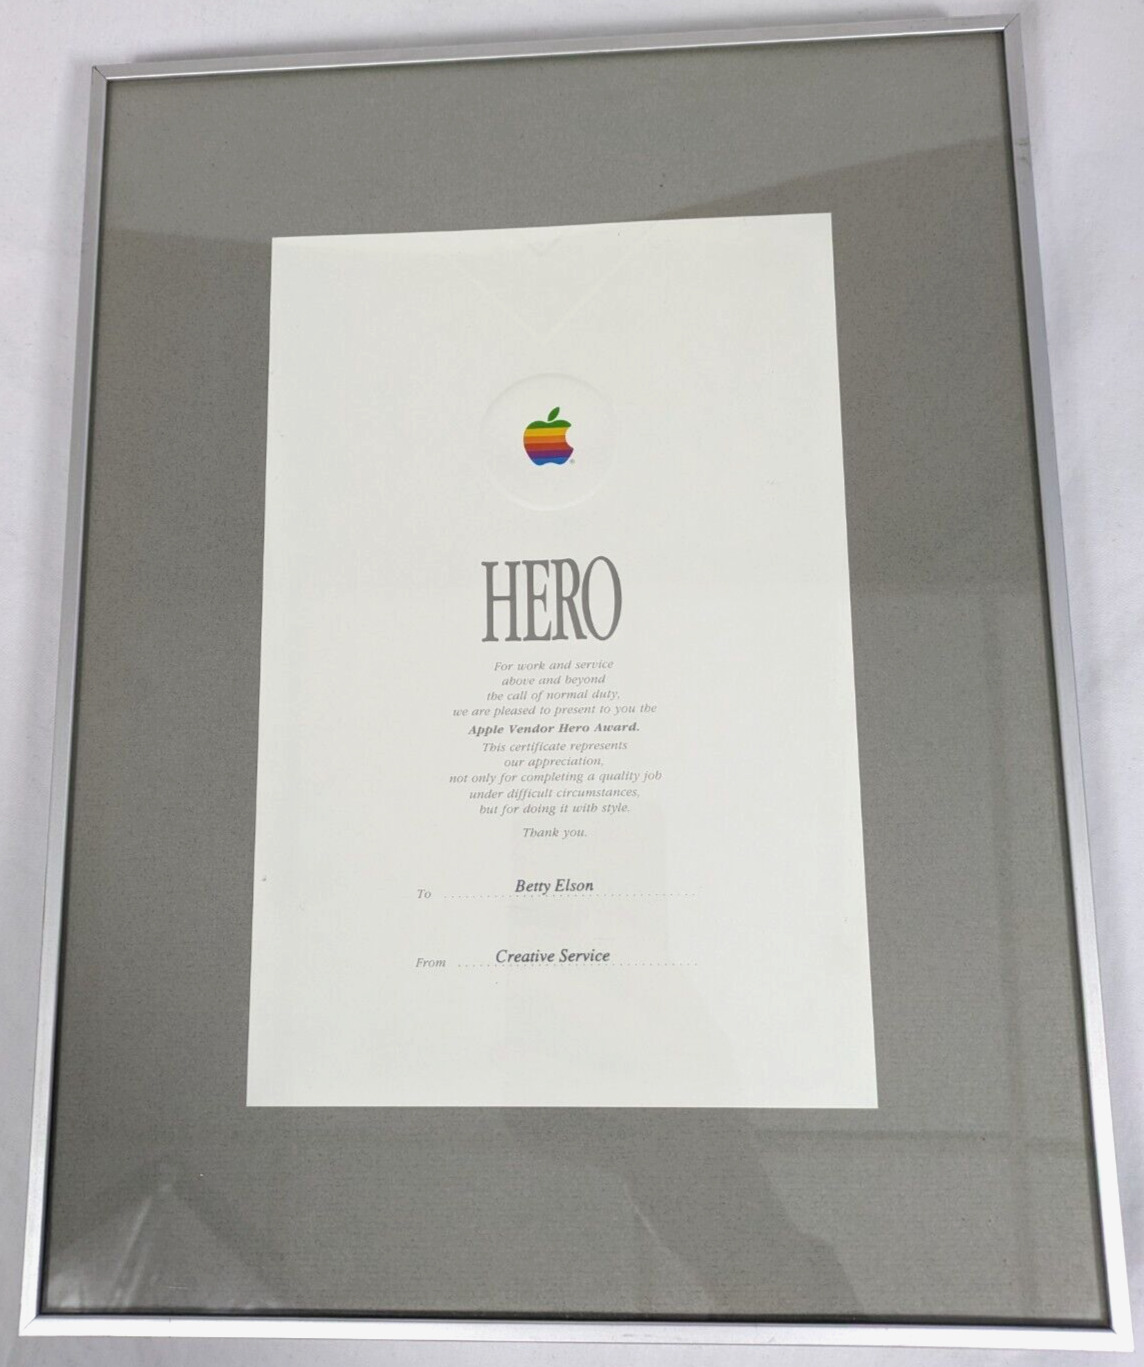 Vtg Apple Computer Mac Vendor Hero Award Recognition Employee Framed Certificate